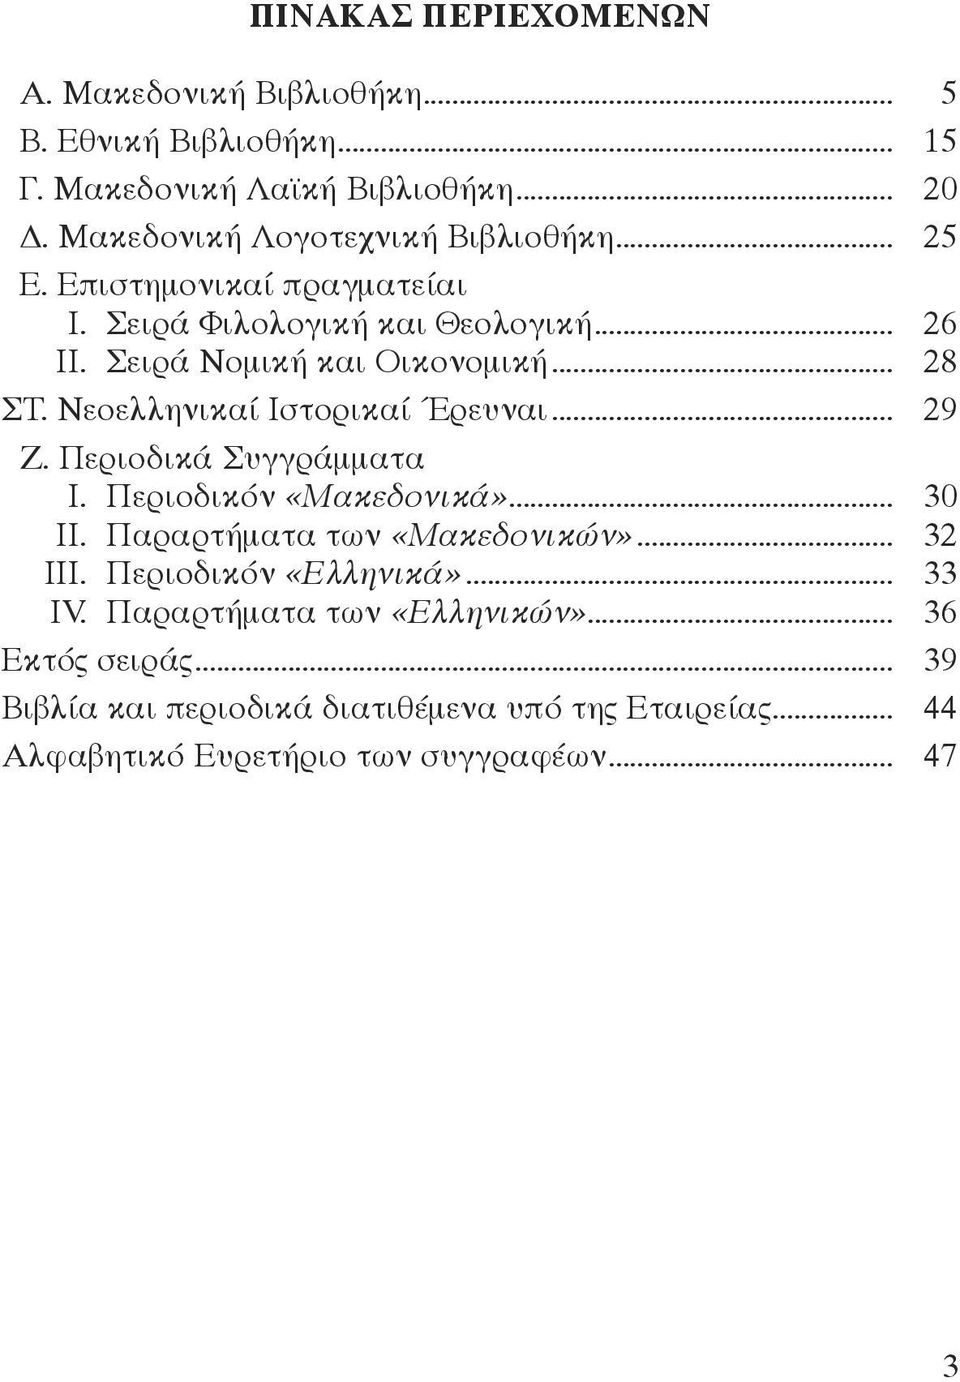 Nεοελληνικαί Iστορικαί Έρευναι... 29 Z. Περιοδικά Συγγράμματα I. Περιοδικόν «Mακεδονικά»... 30 II. Παραρτήματα των «Mακεδονικών»... 32 III.